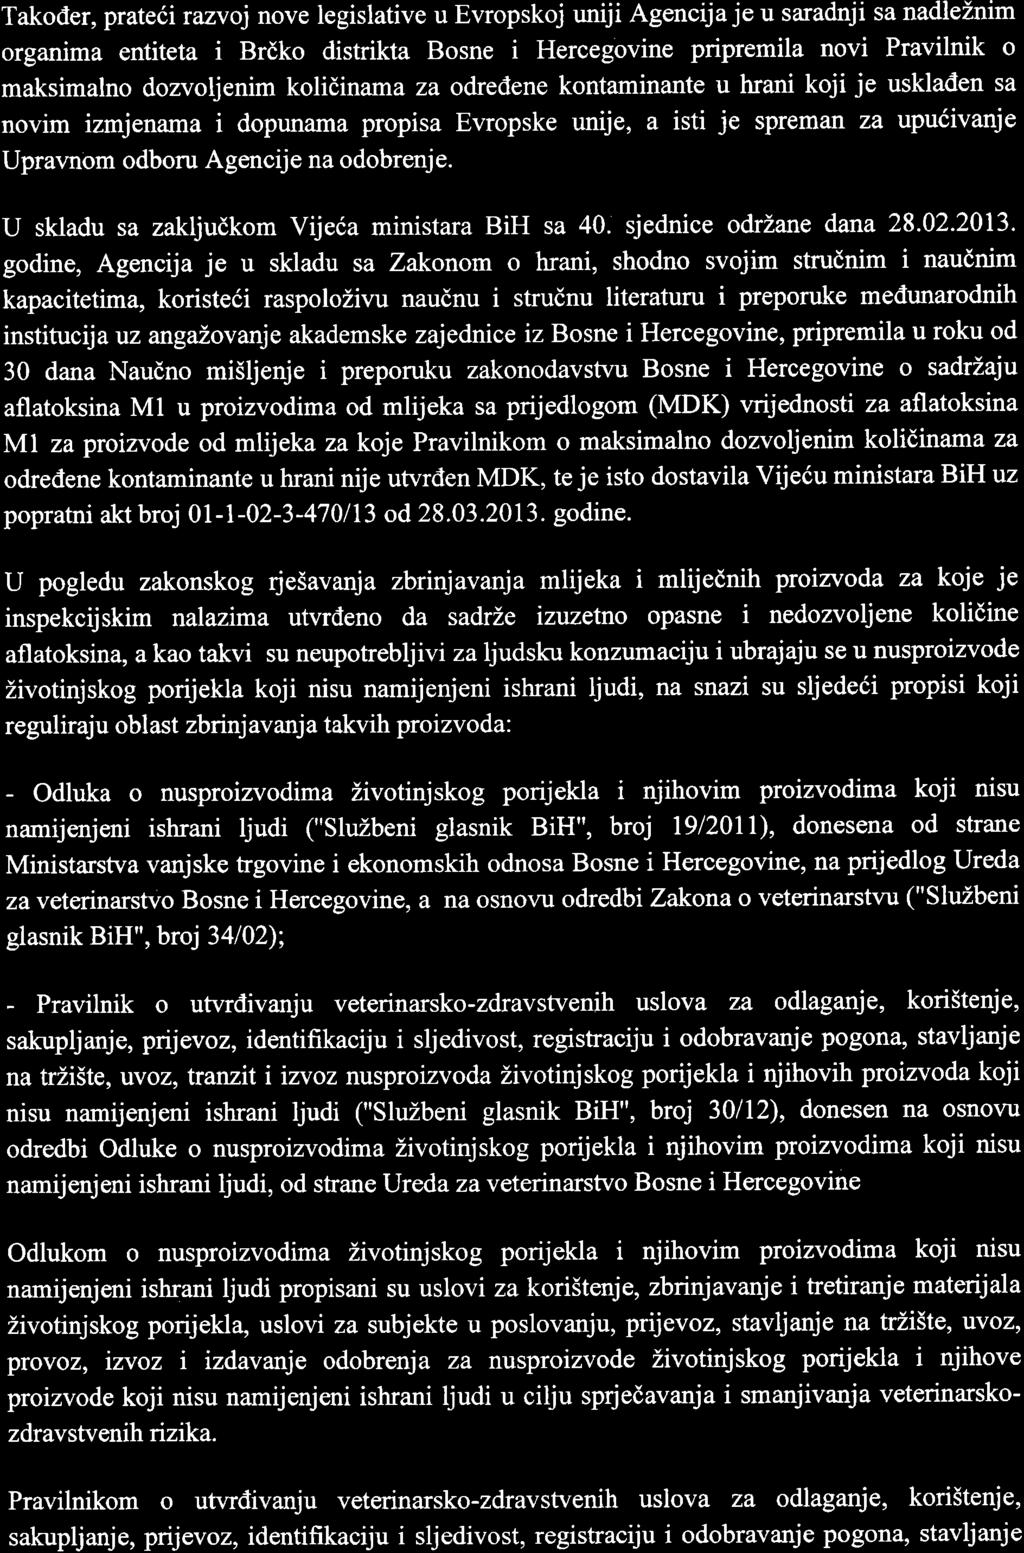 Takoiler, prateii razvoj nove legislative u Evropskoj uniji Agencija je u saradnji sa nadleznim organima entiteta i Brdko distrikta Bosne i Hercegovine pripremila novi Pravilnik o maksimalno